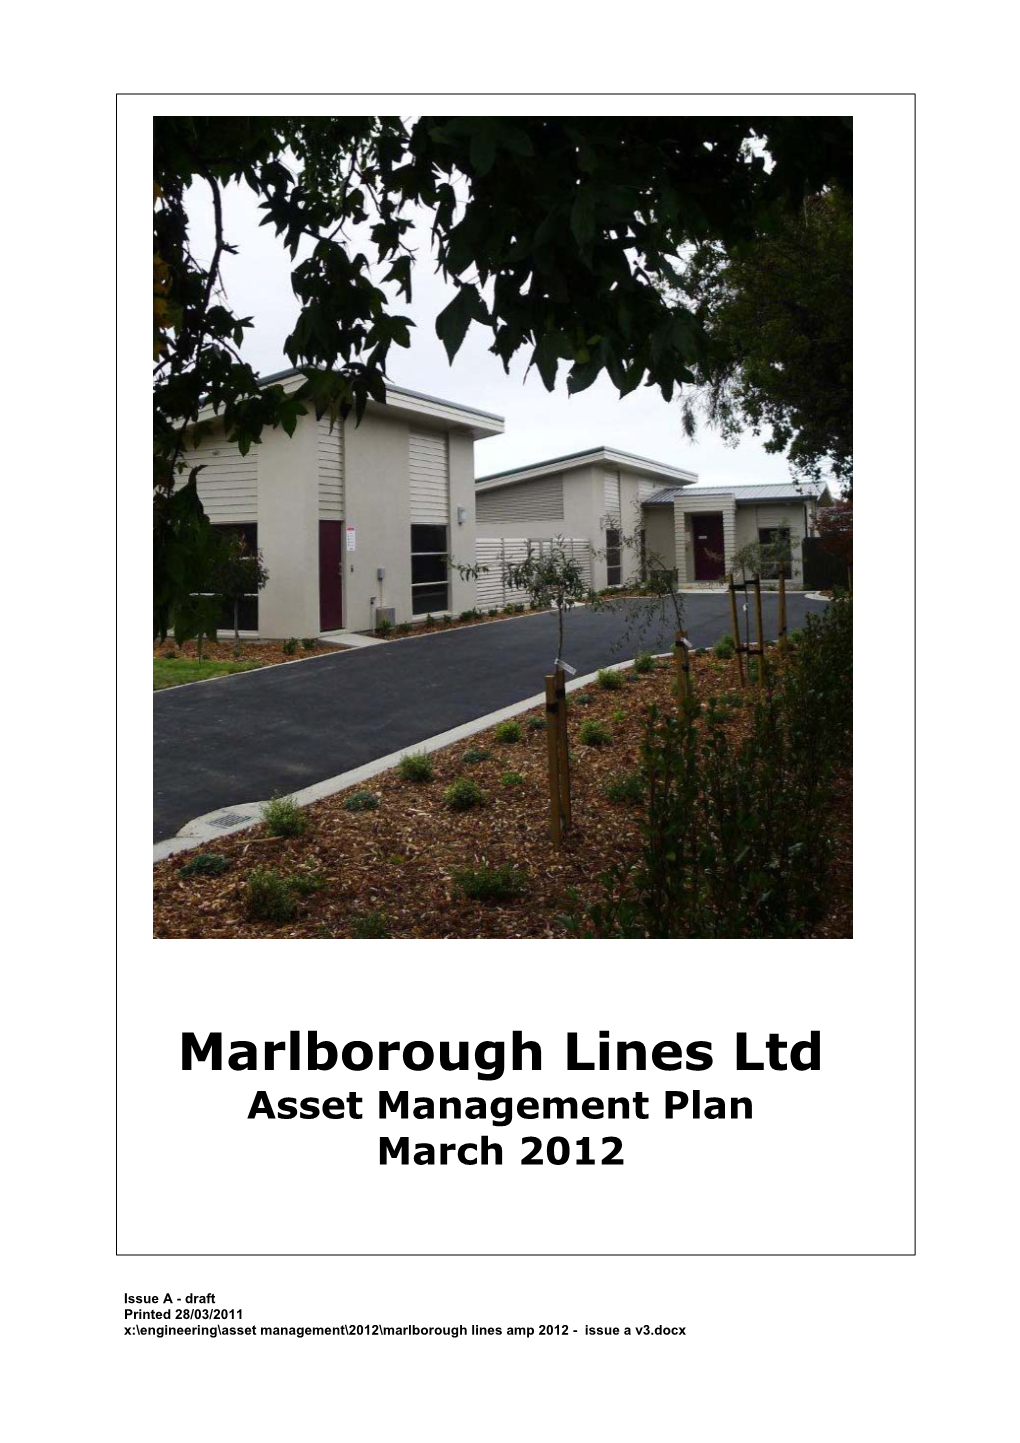 Marlborough Lines Ltd Asset Management Plan March 2012